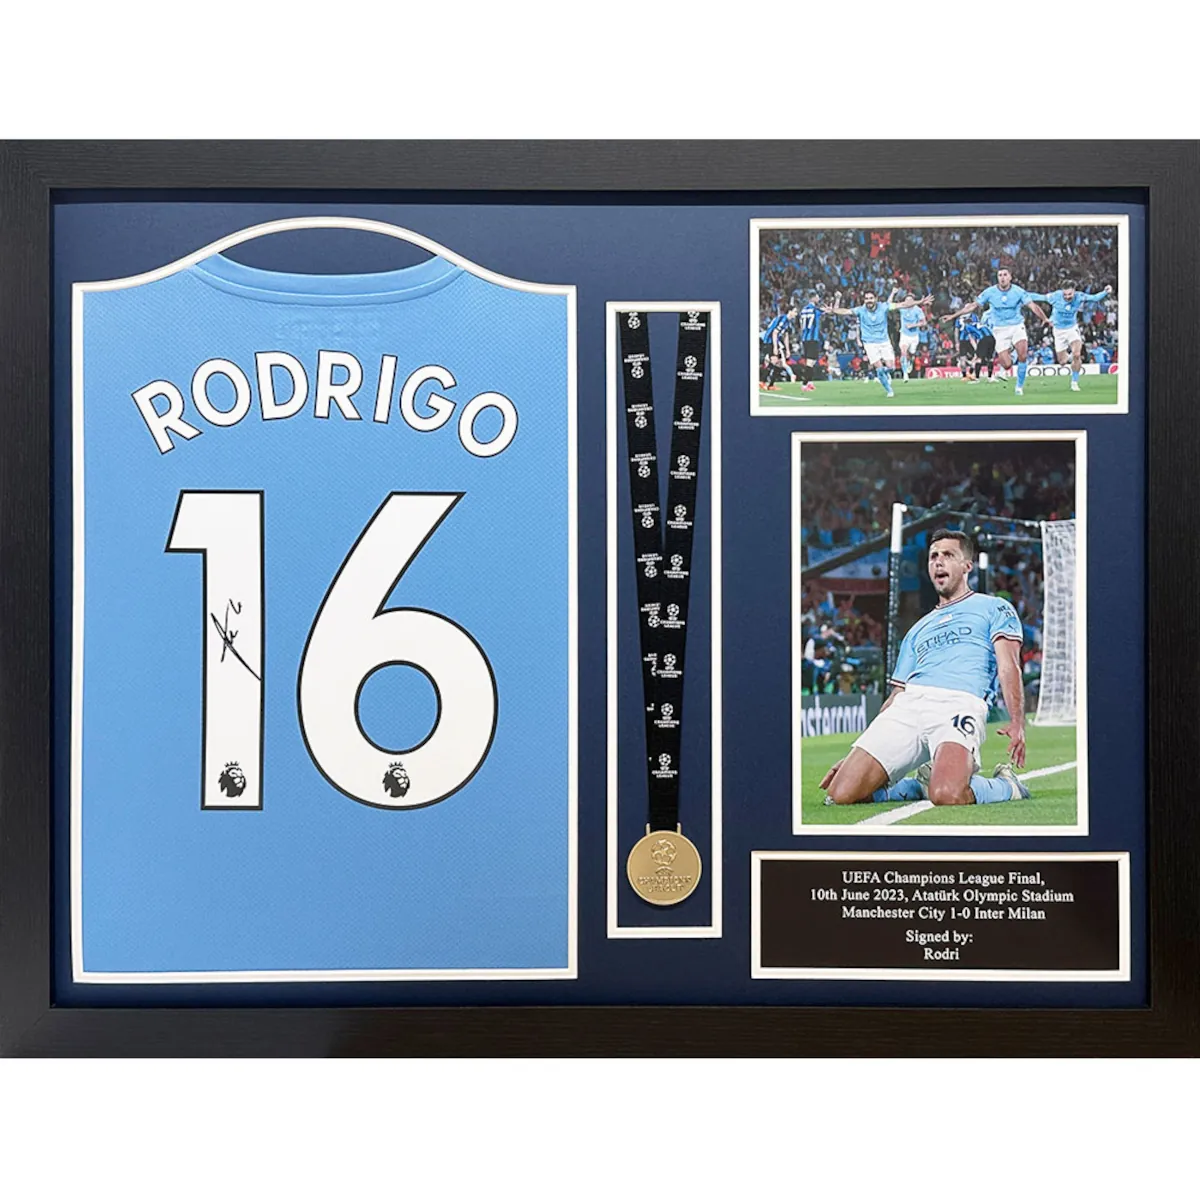 TM-04982 Manchester City F.C. Rodri Framed Signed 2021-2022 Season Replica Football Shirt & Medal